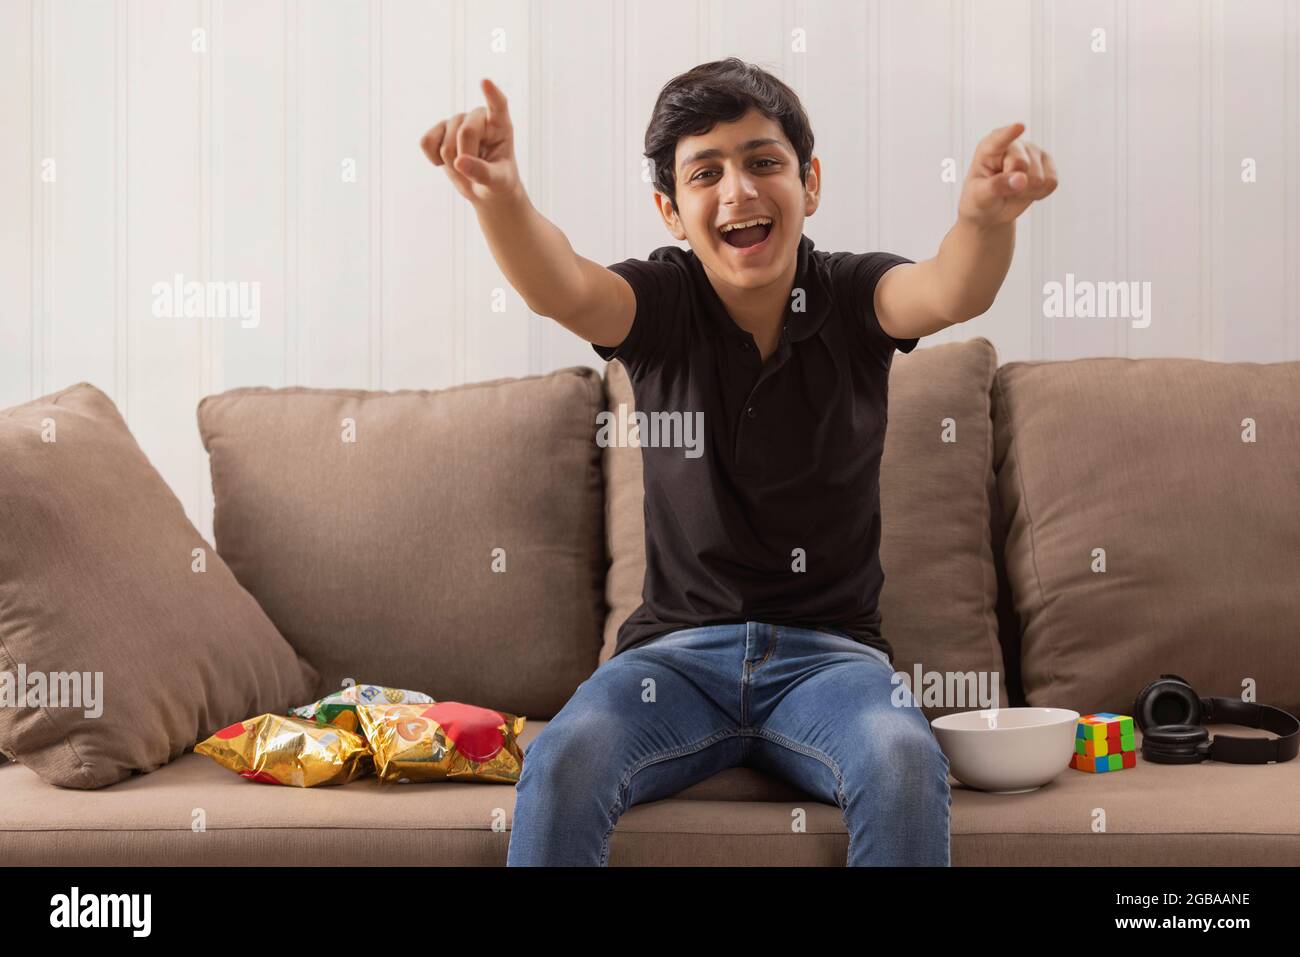 A HAPPY TEENAGE BOY CHEERING WHILE ENJOYING AT HOME Stock Photo